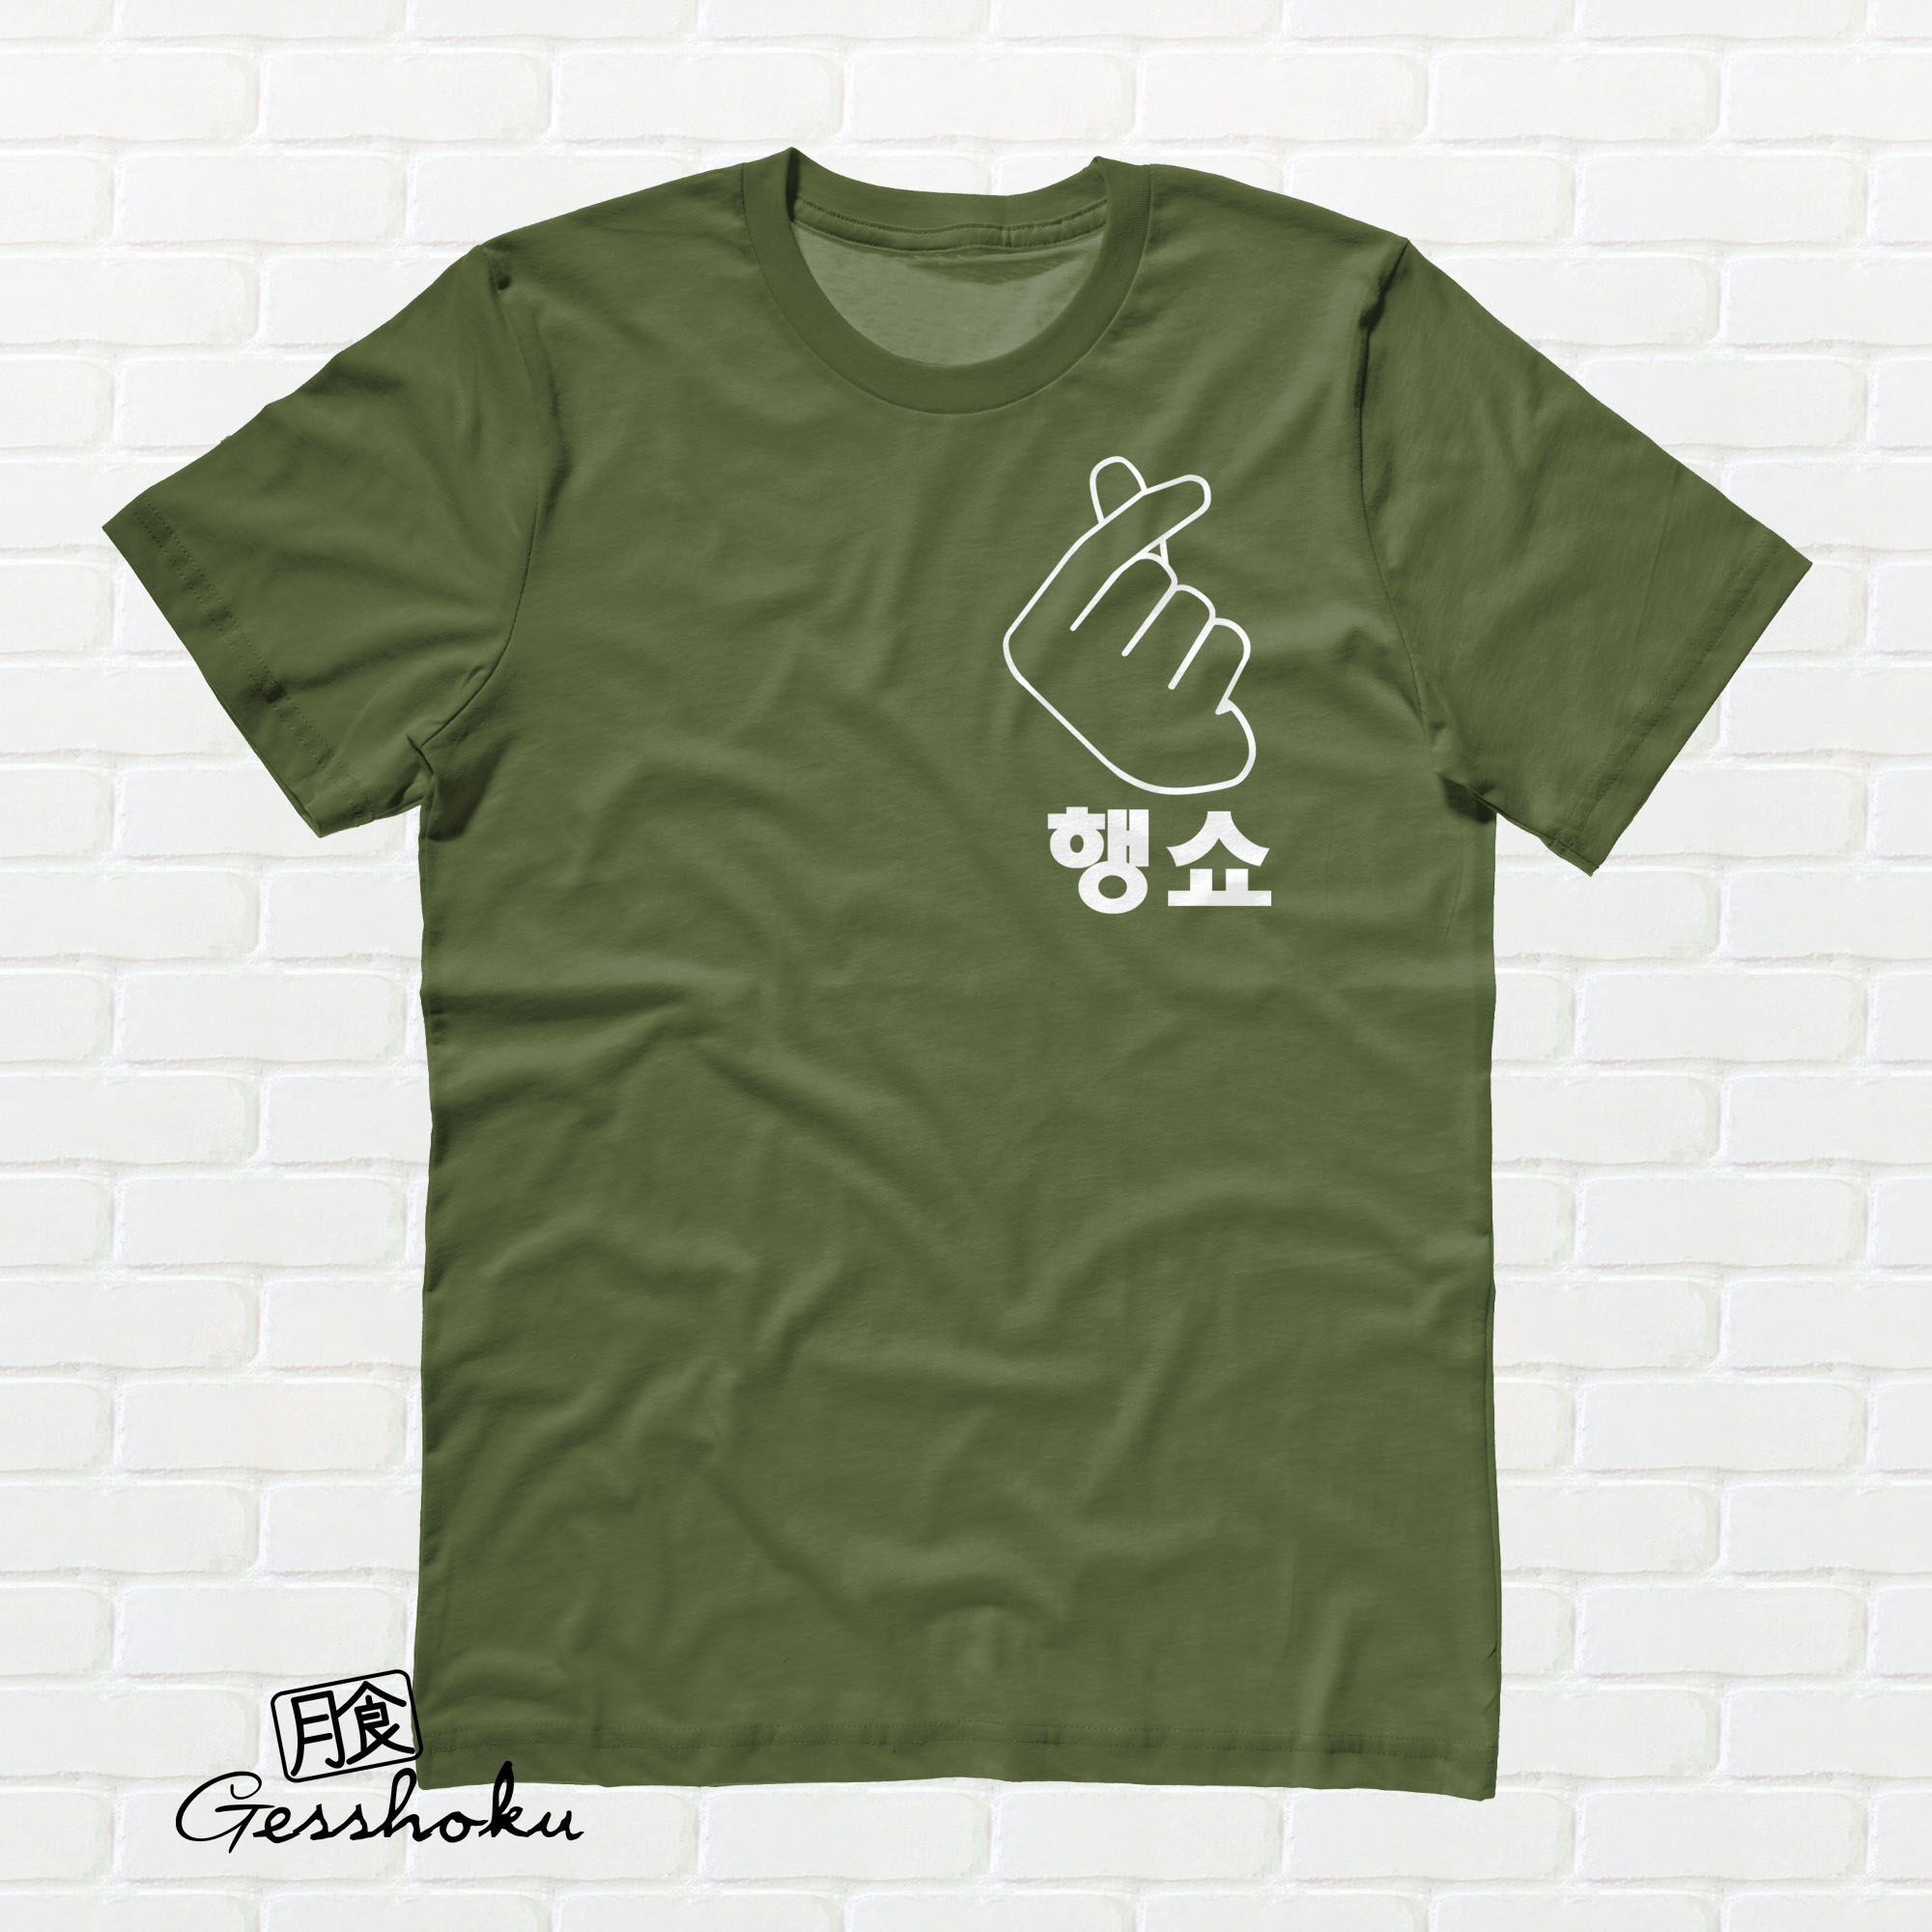 Peace Out "Haengsho" Korean T-shirt - Olive Green